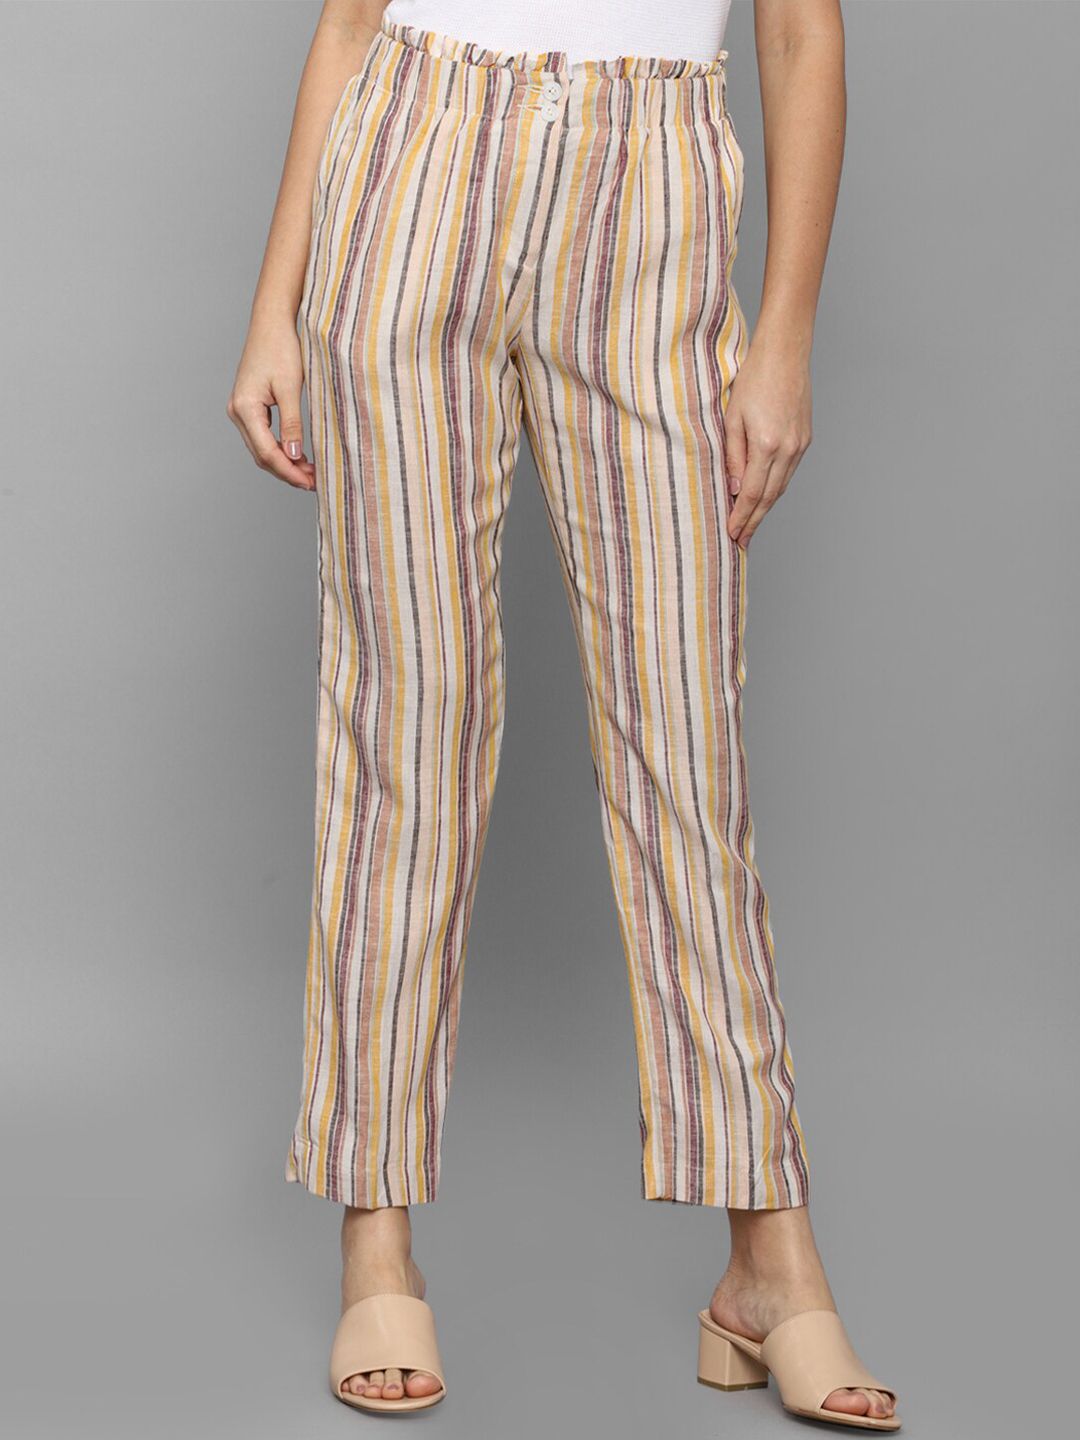 Allen Solly Women Multicoloured Striped Trousers Price in India